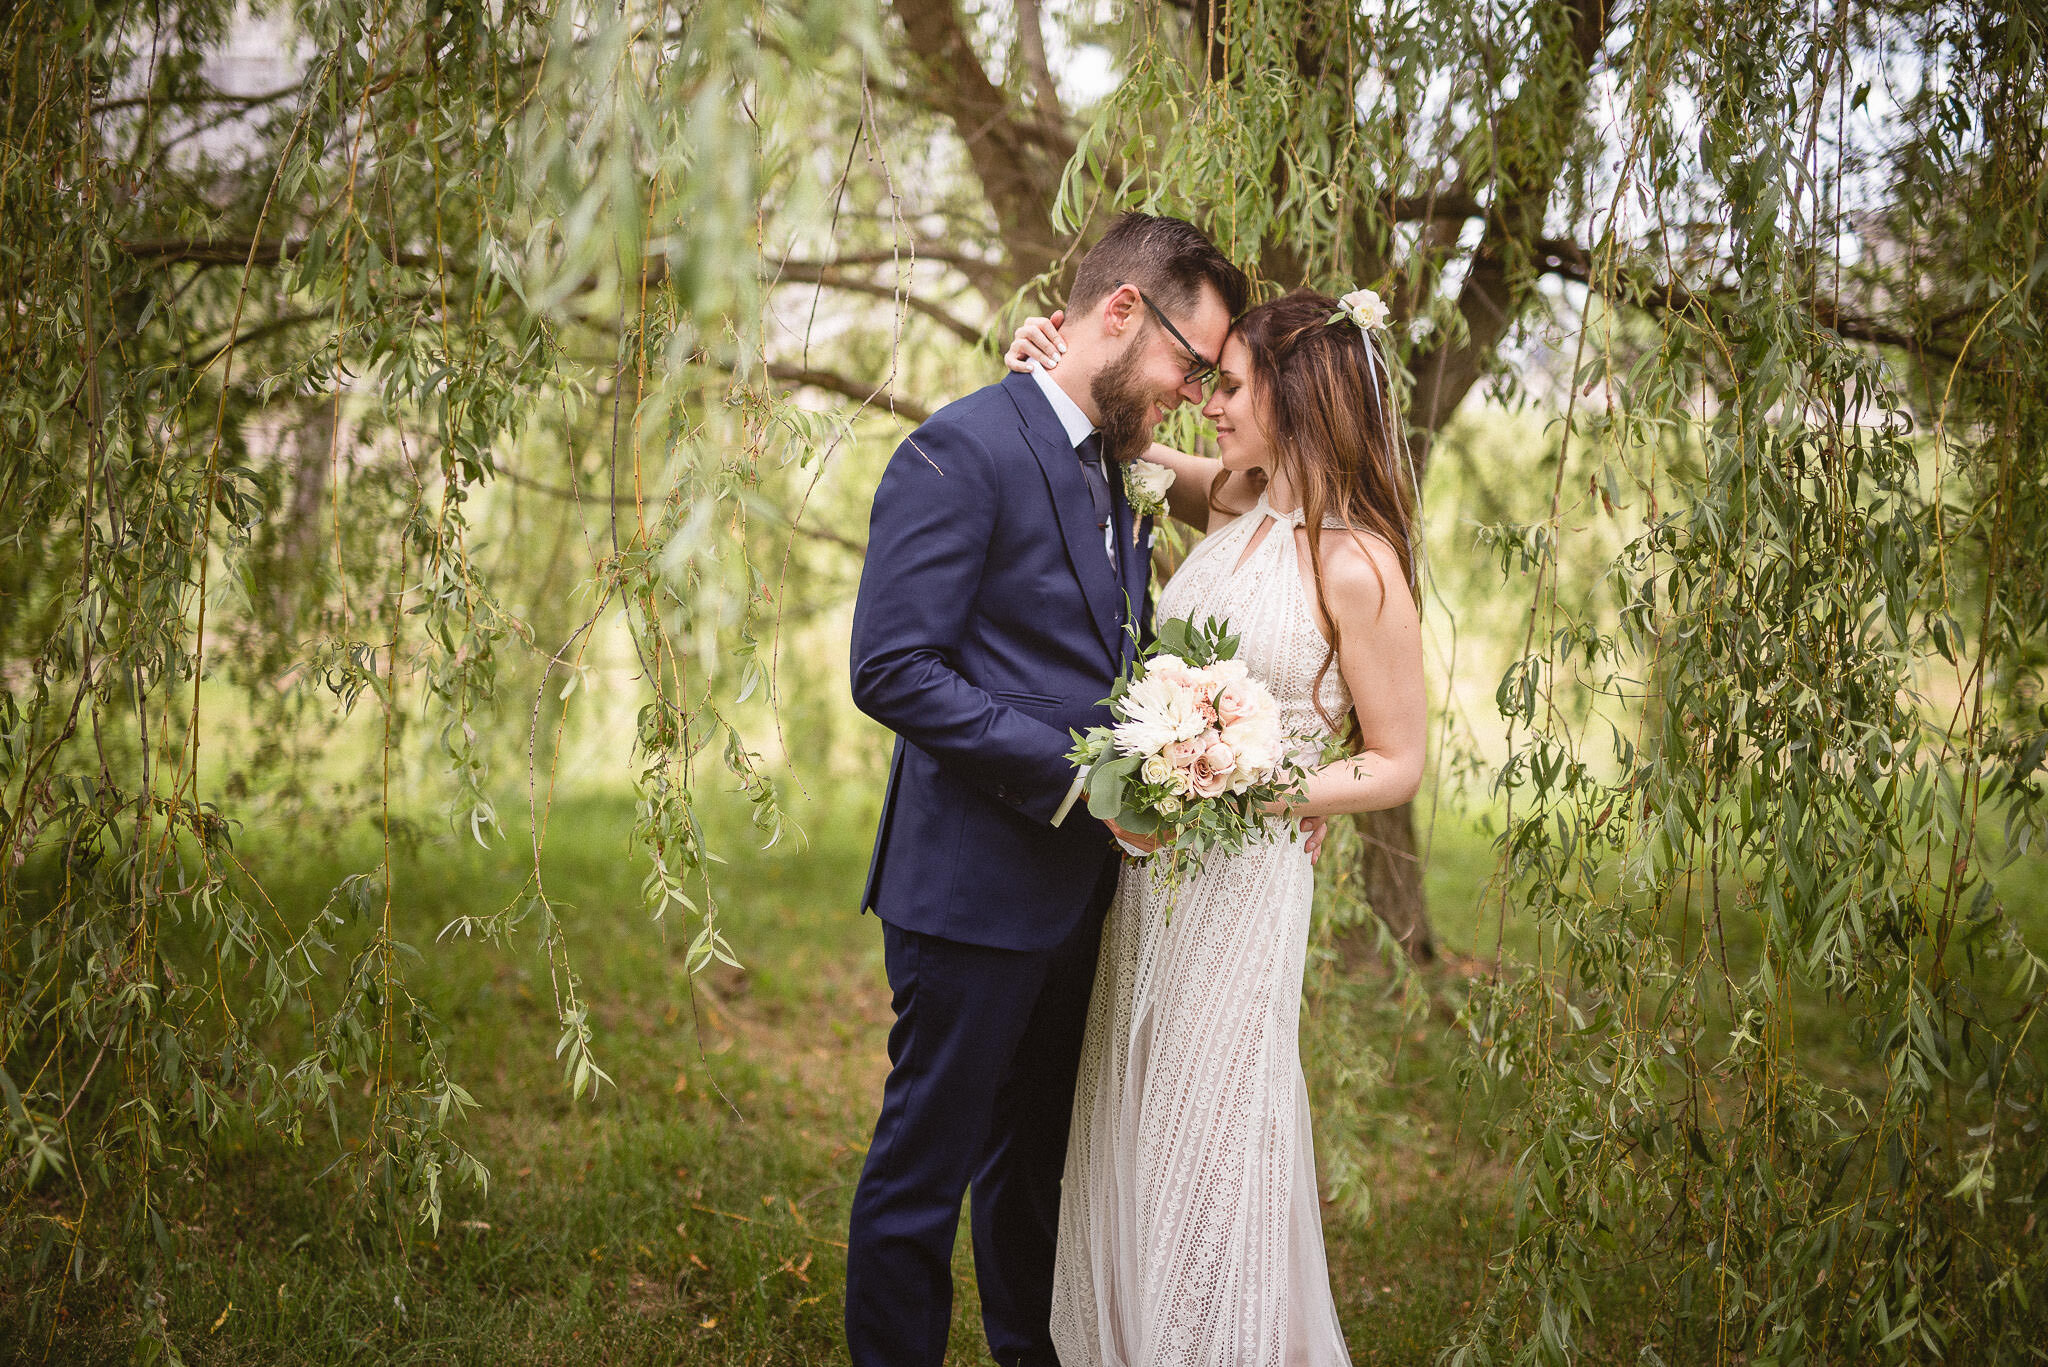 Wedding Photo in Willow Tree | Ontario Wedding Photographer